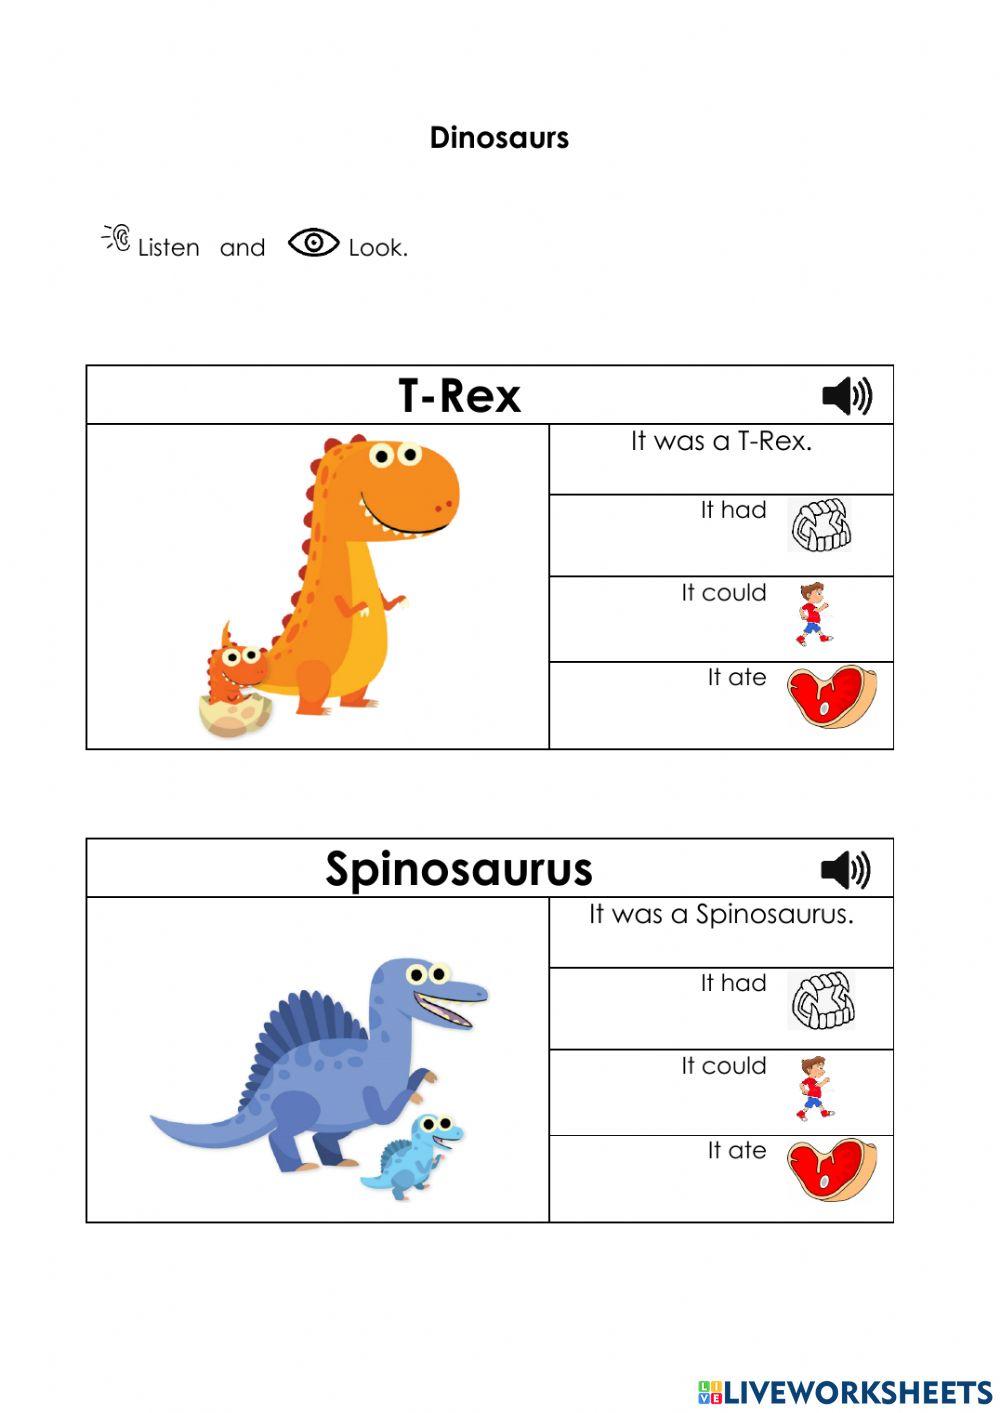 Dinosaur fact file